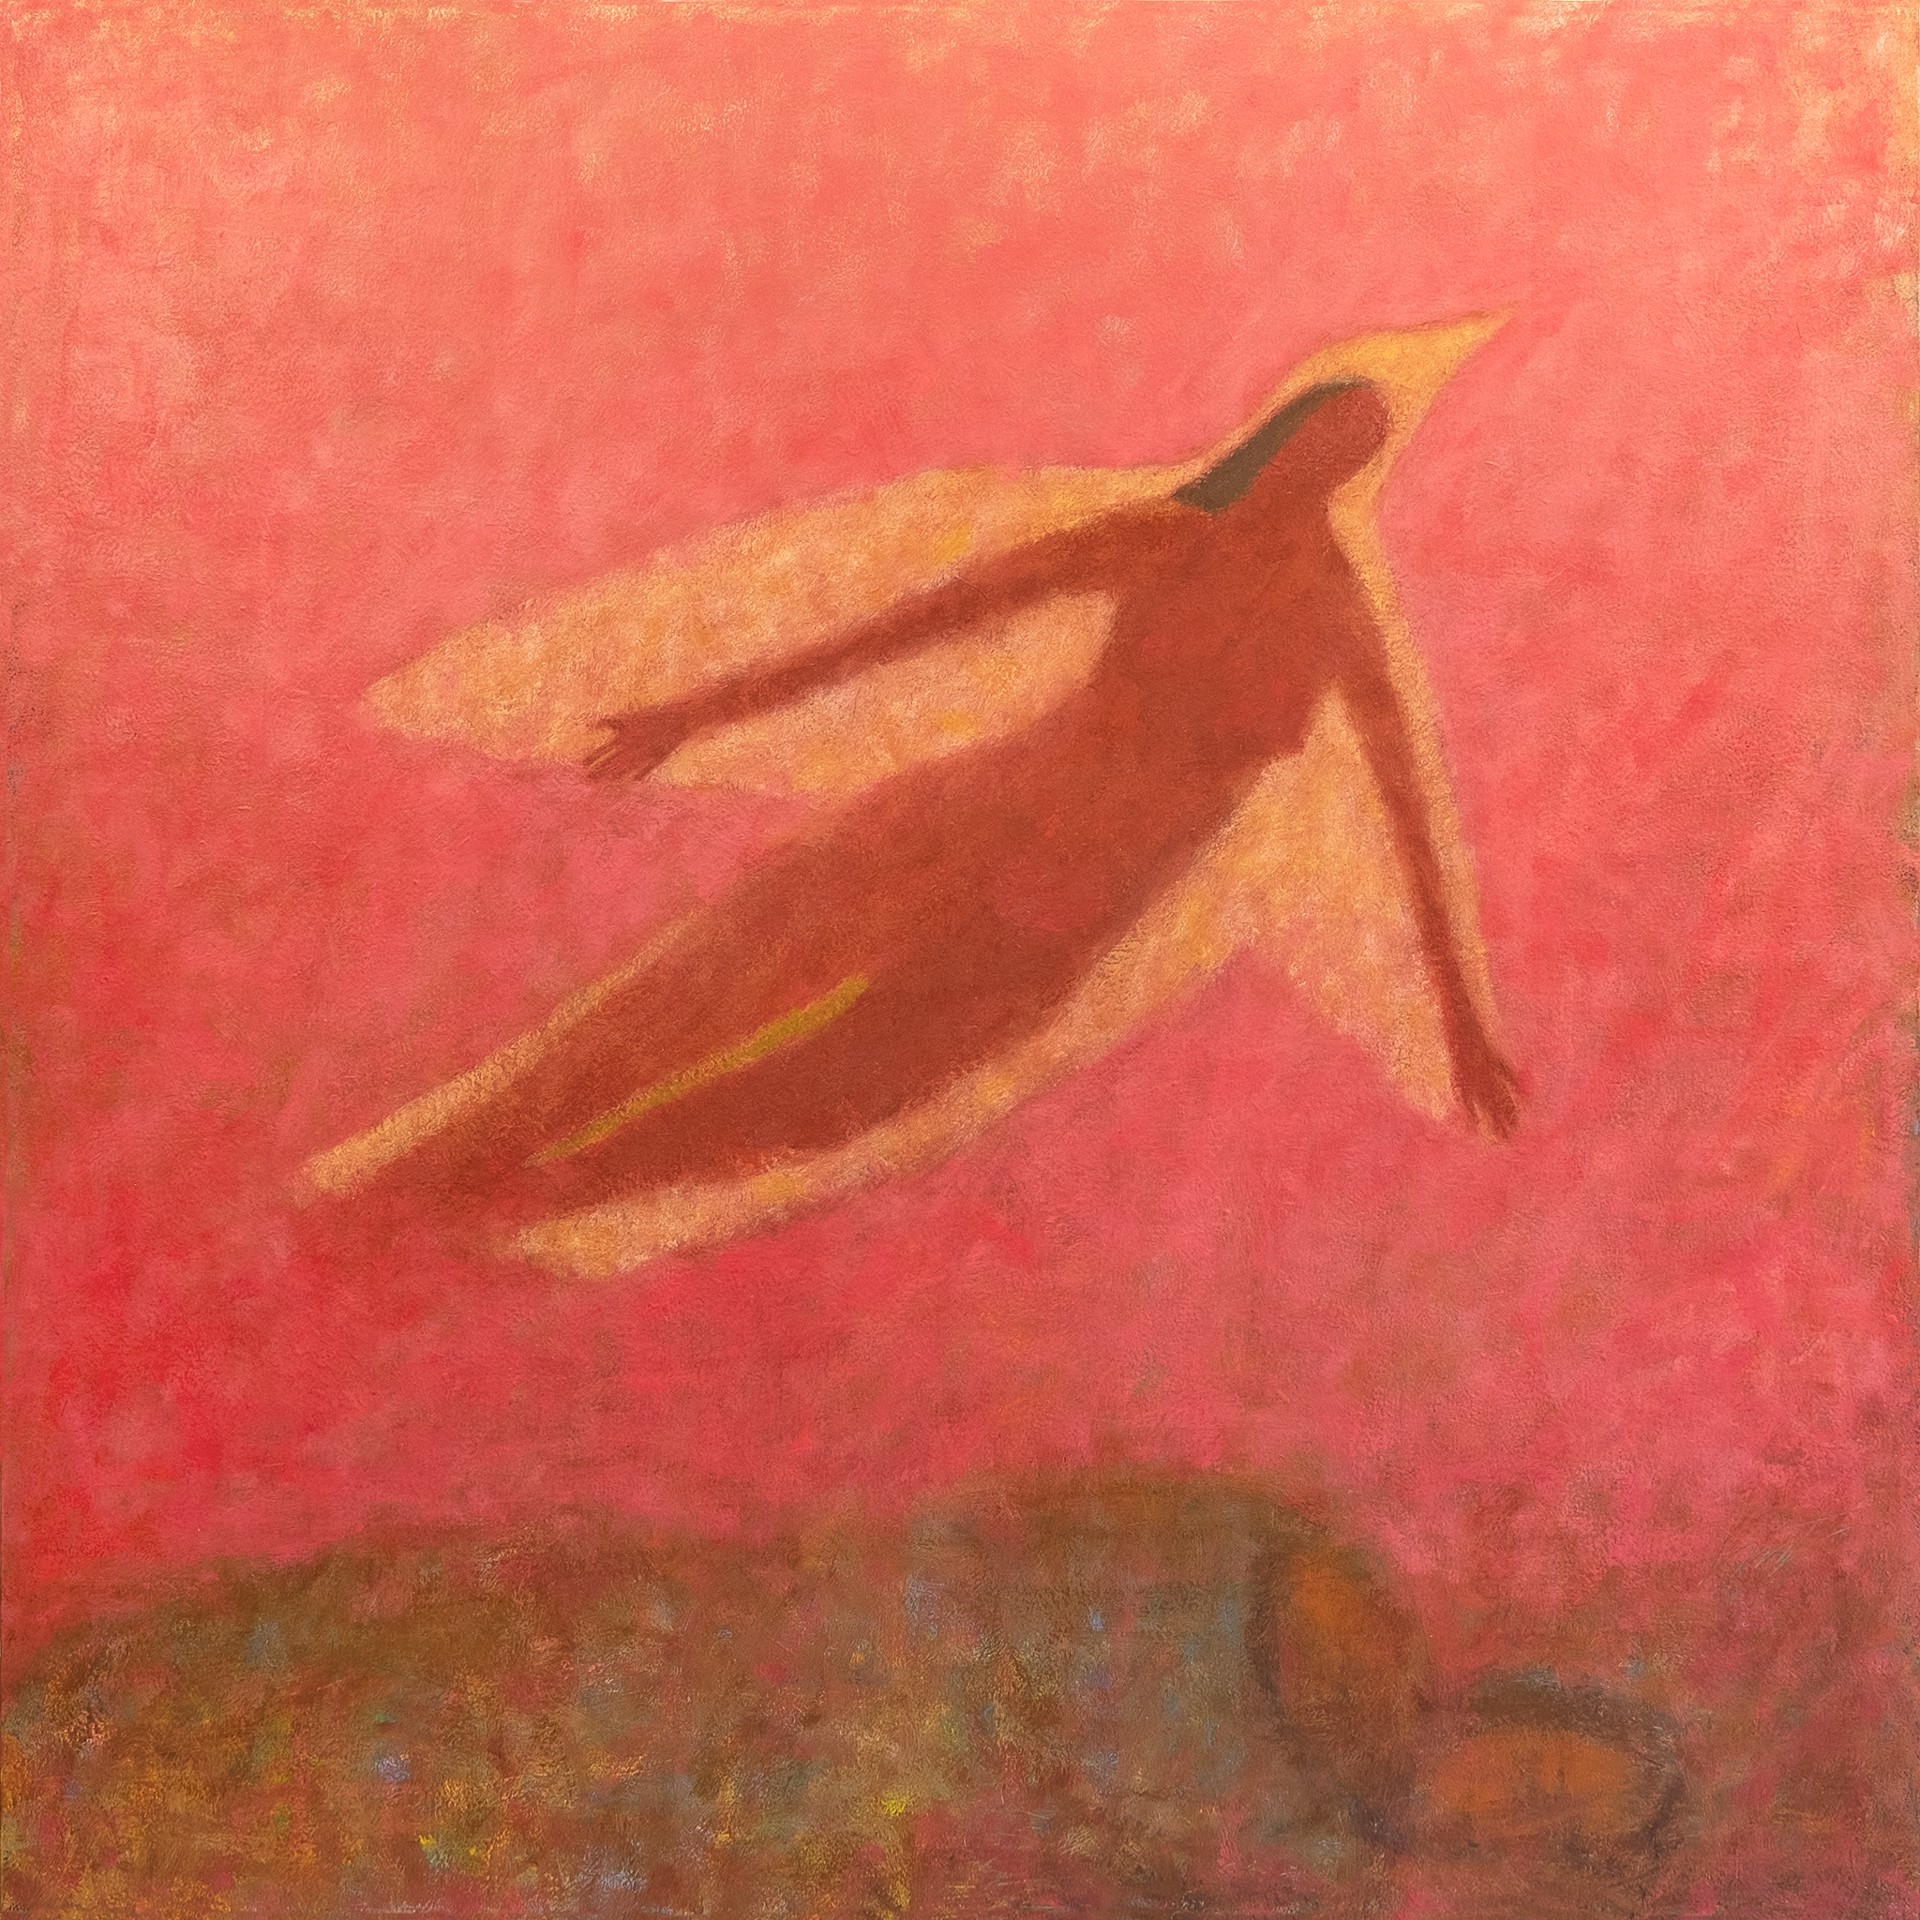 Dreaming I Am A Bird by Ruth Hunter